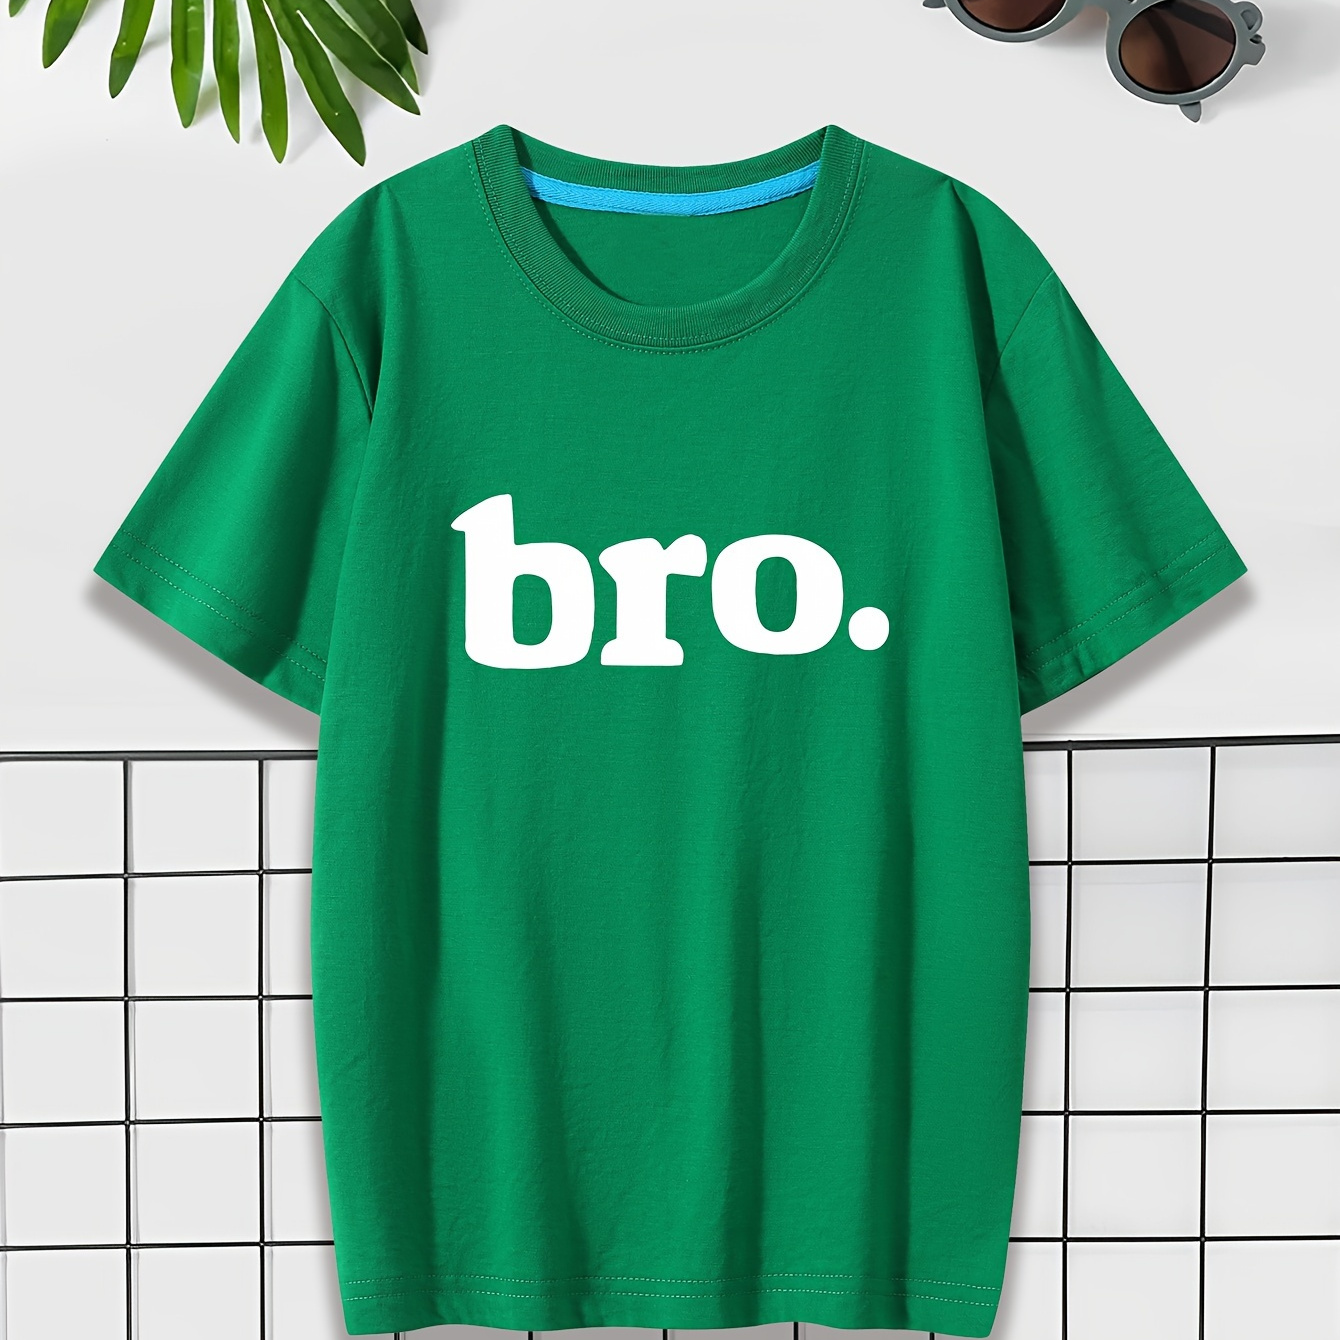 

Bro Print Children's Stylish T-shirt, Boys Summer Sports Lightweight Comfy Round Neck Short Sleeve Casual Top